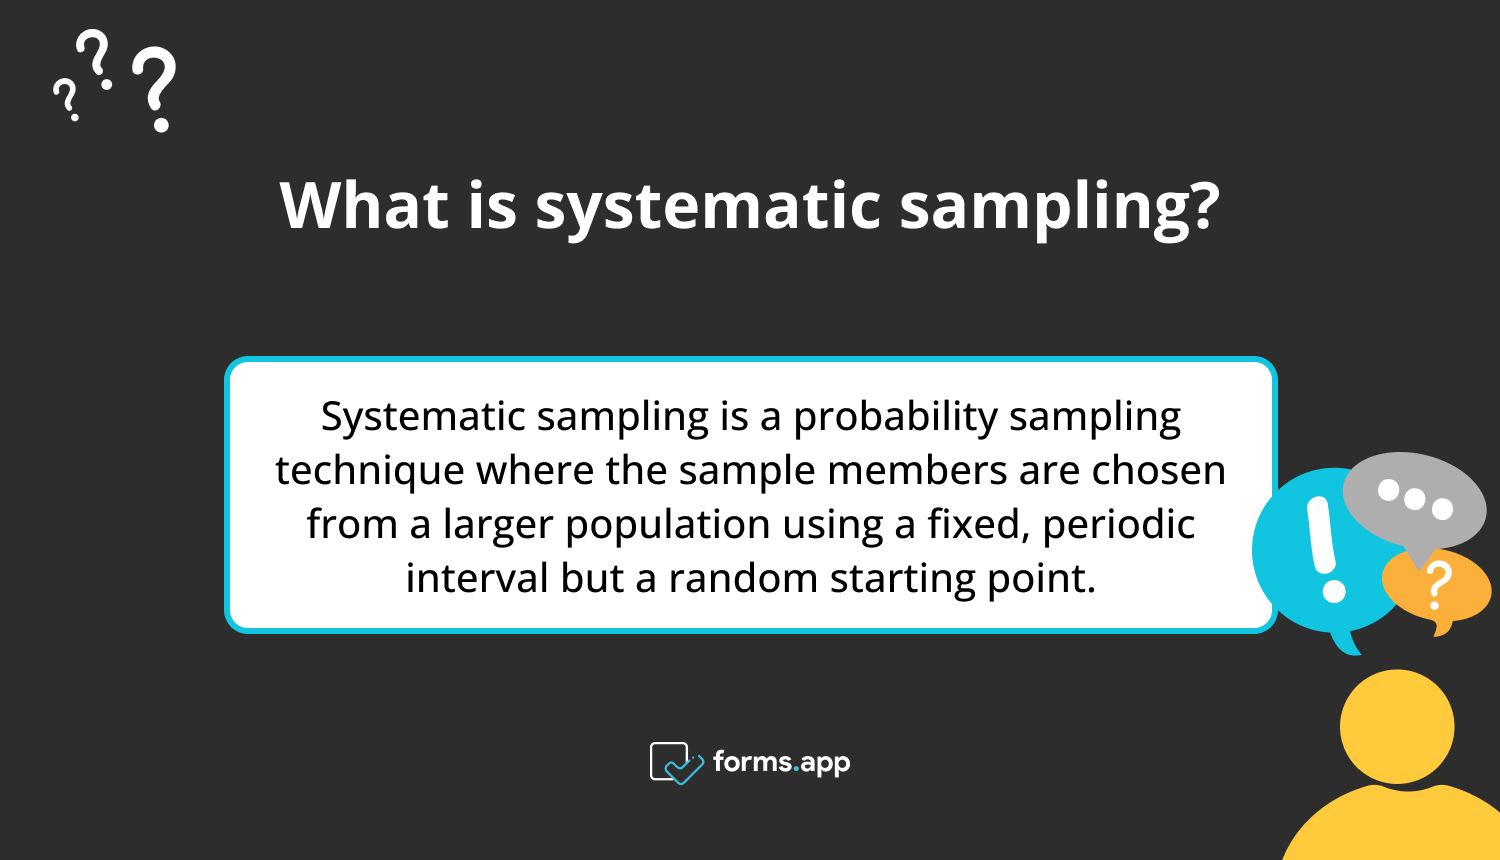 Systematic Sampling